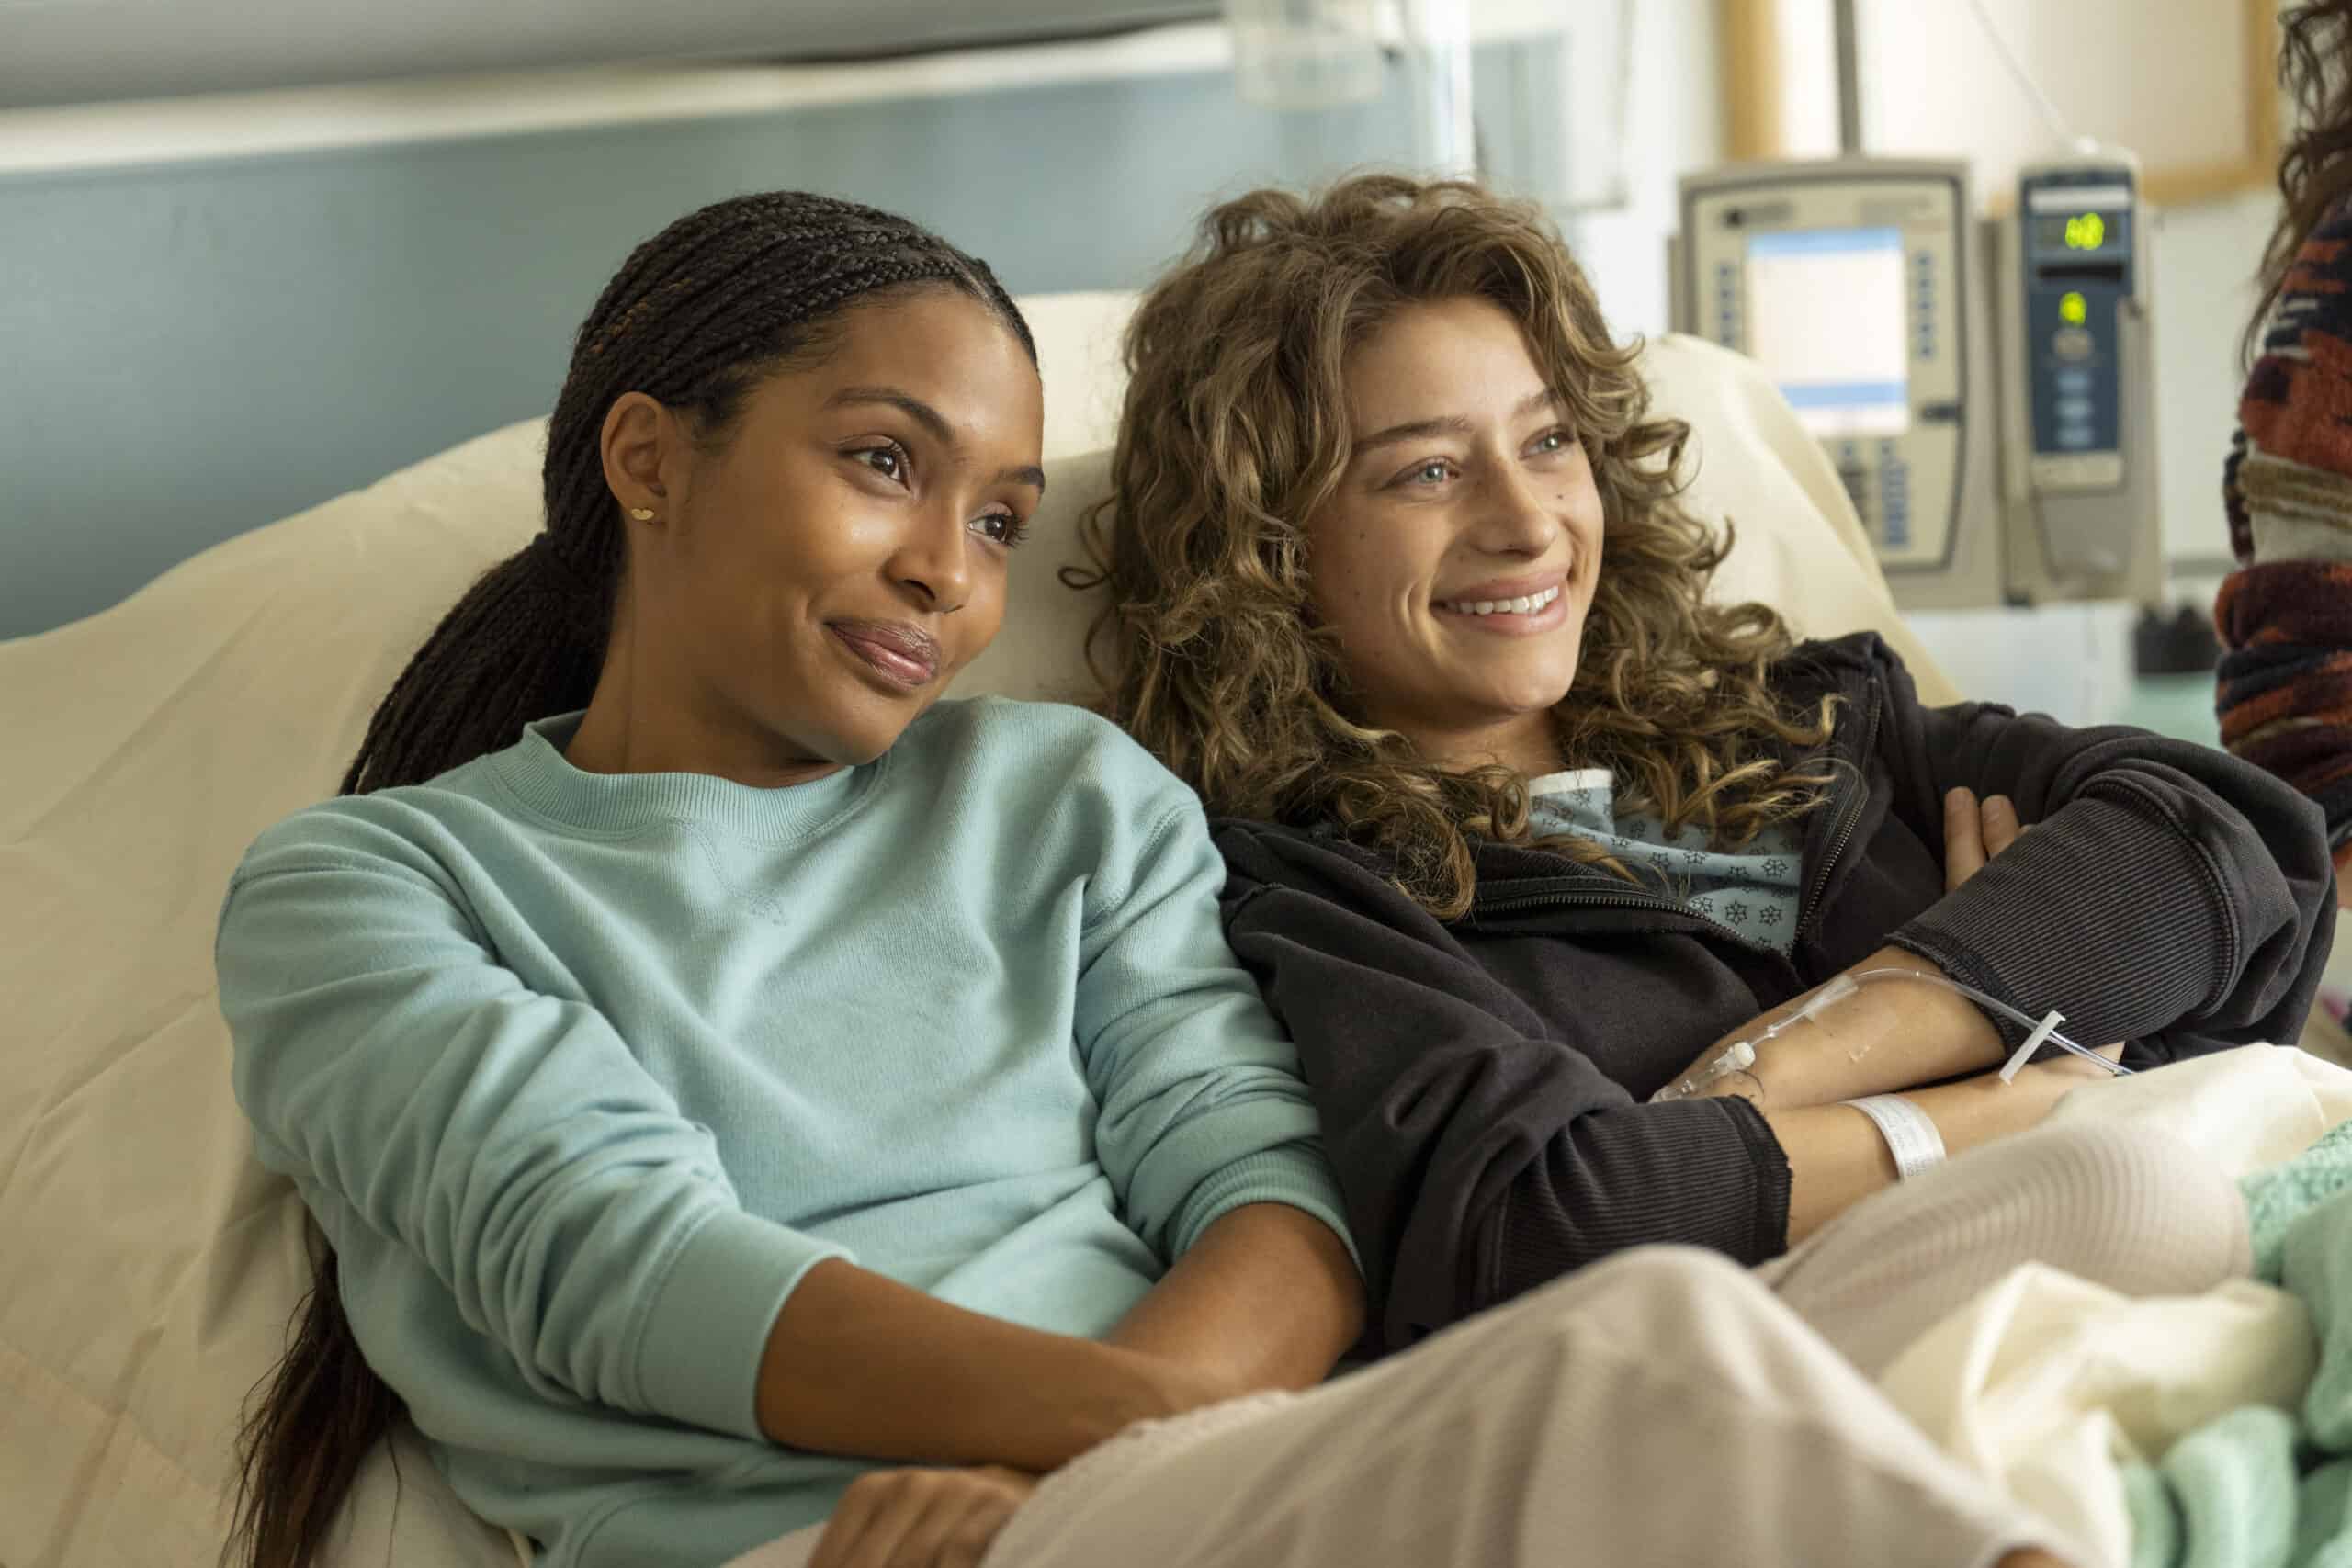 Jane (Yara Shahidi) and Corinne (Odessa A'zion) during a hospital visit